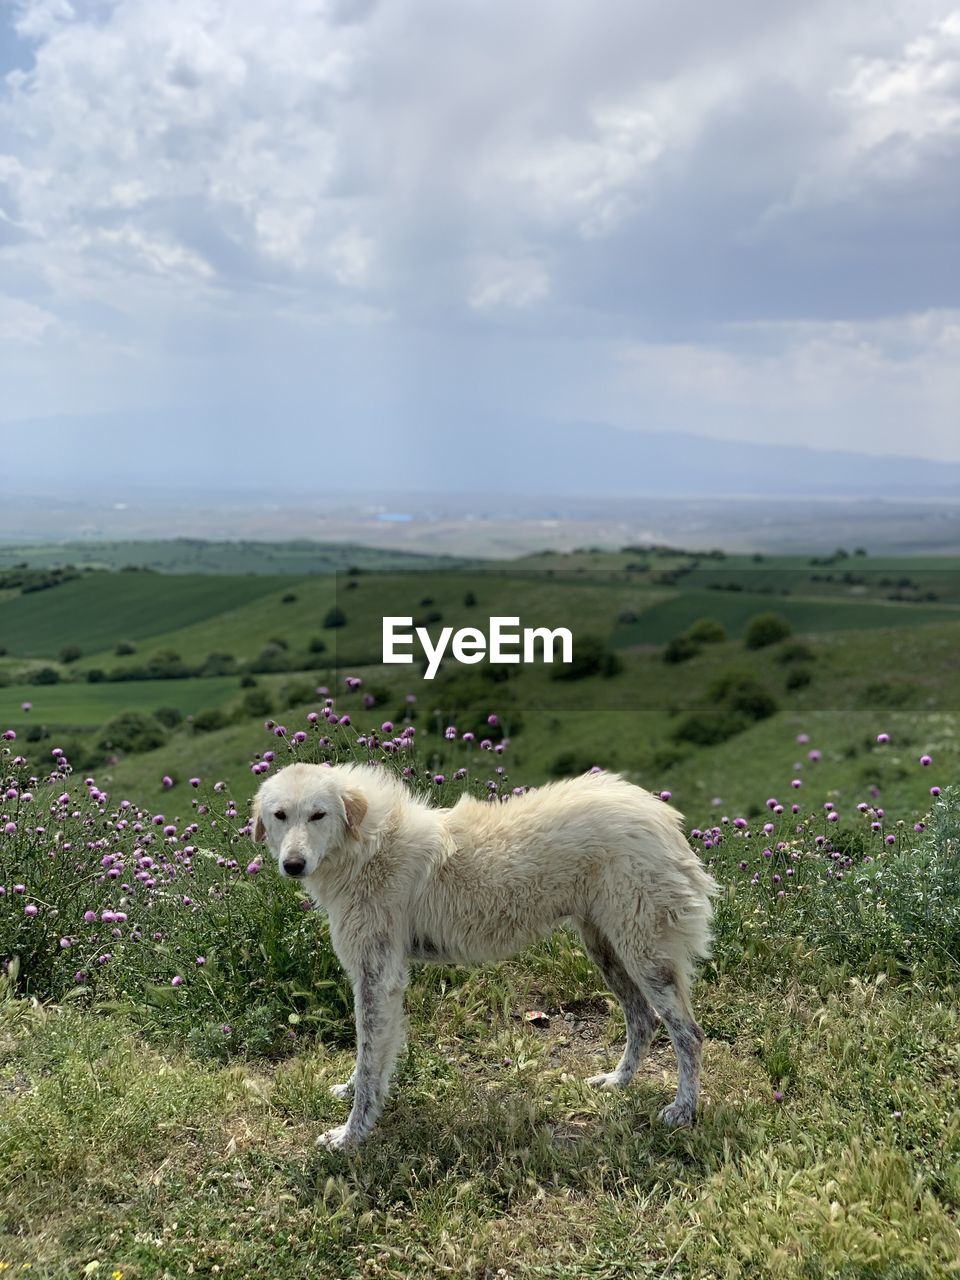 Dog in mountain